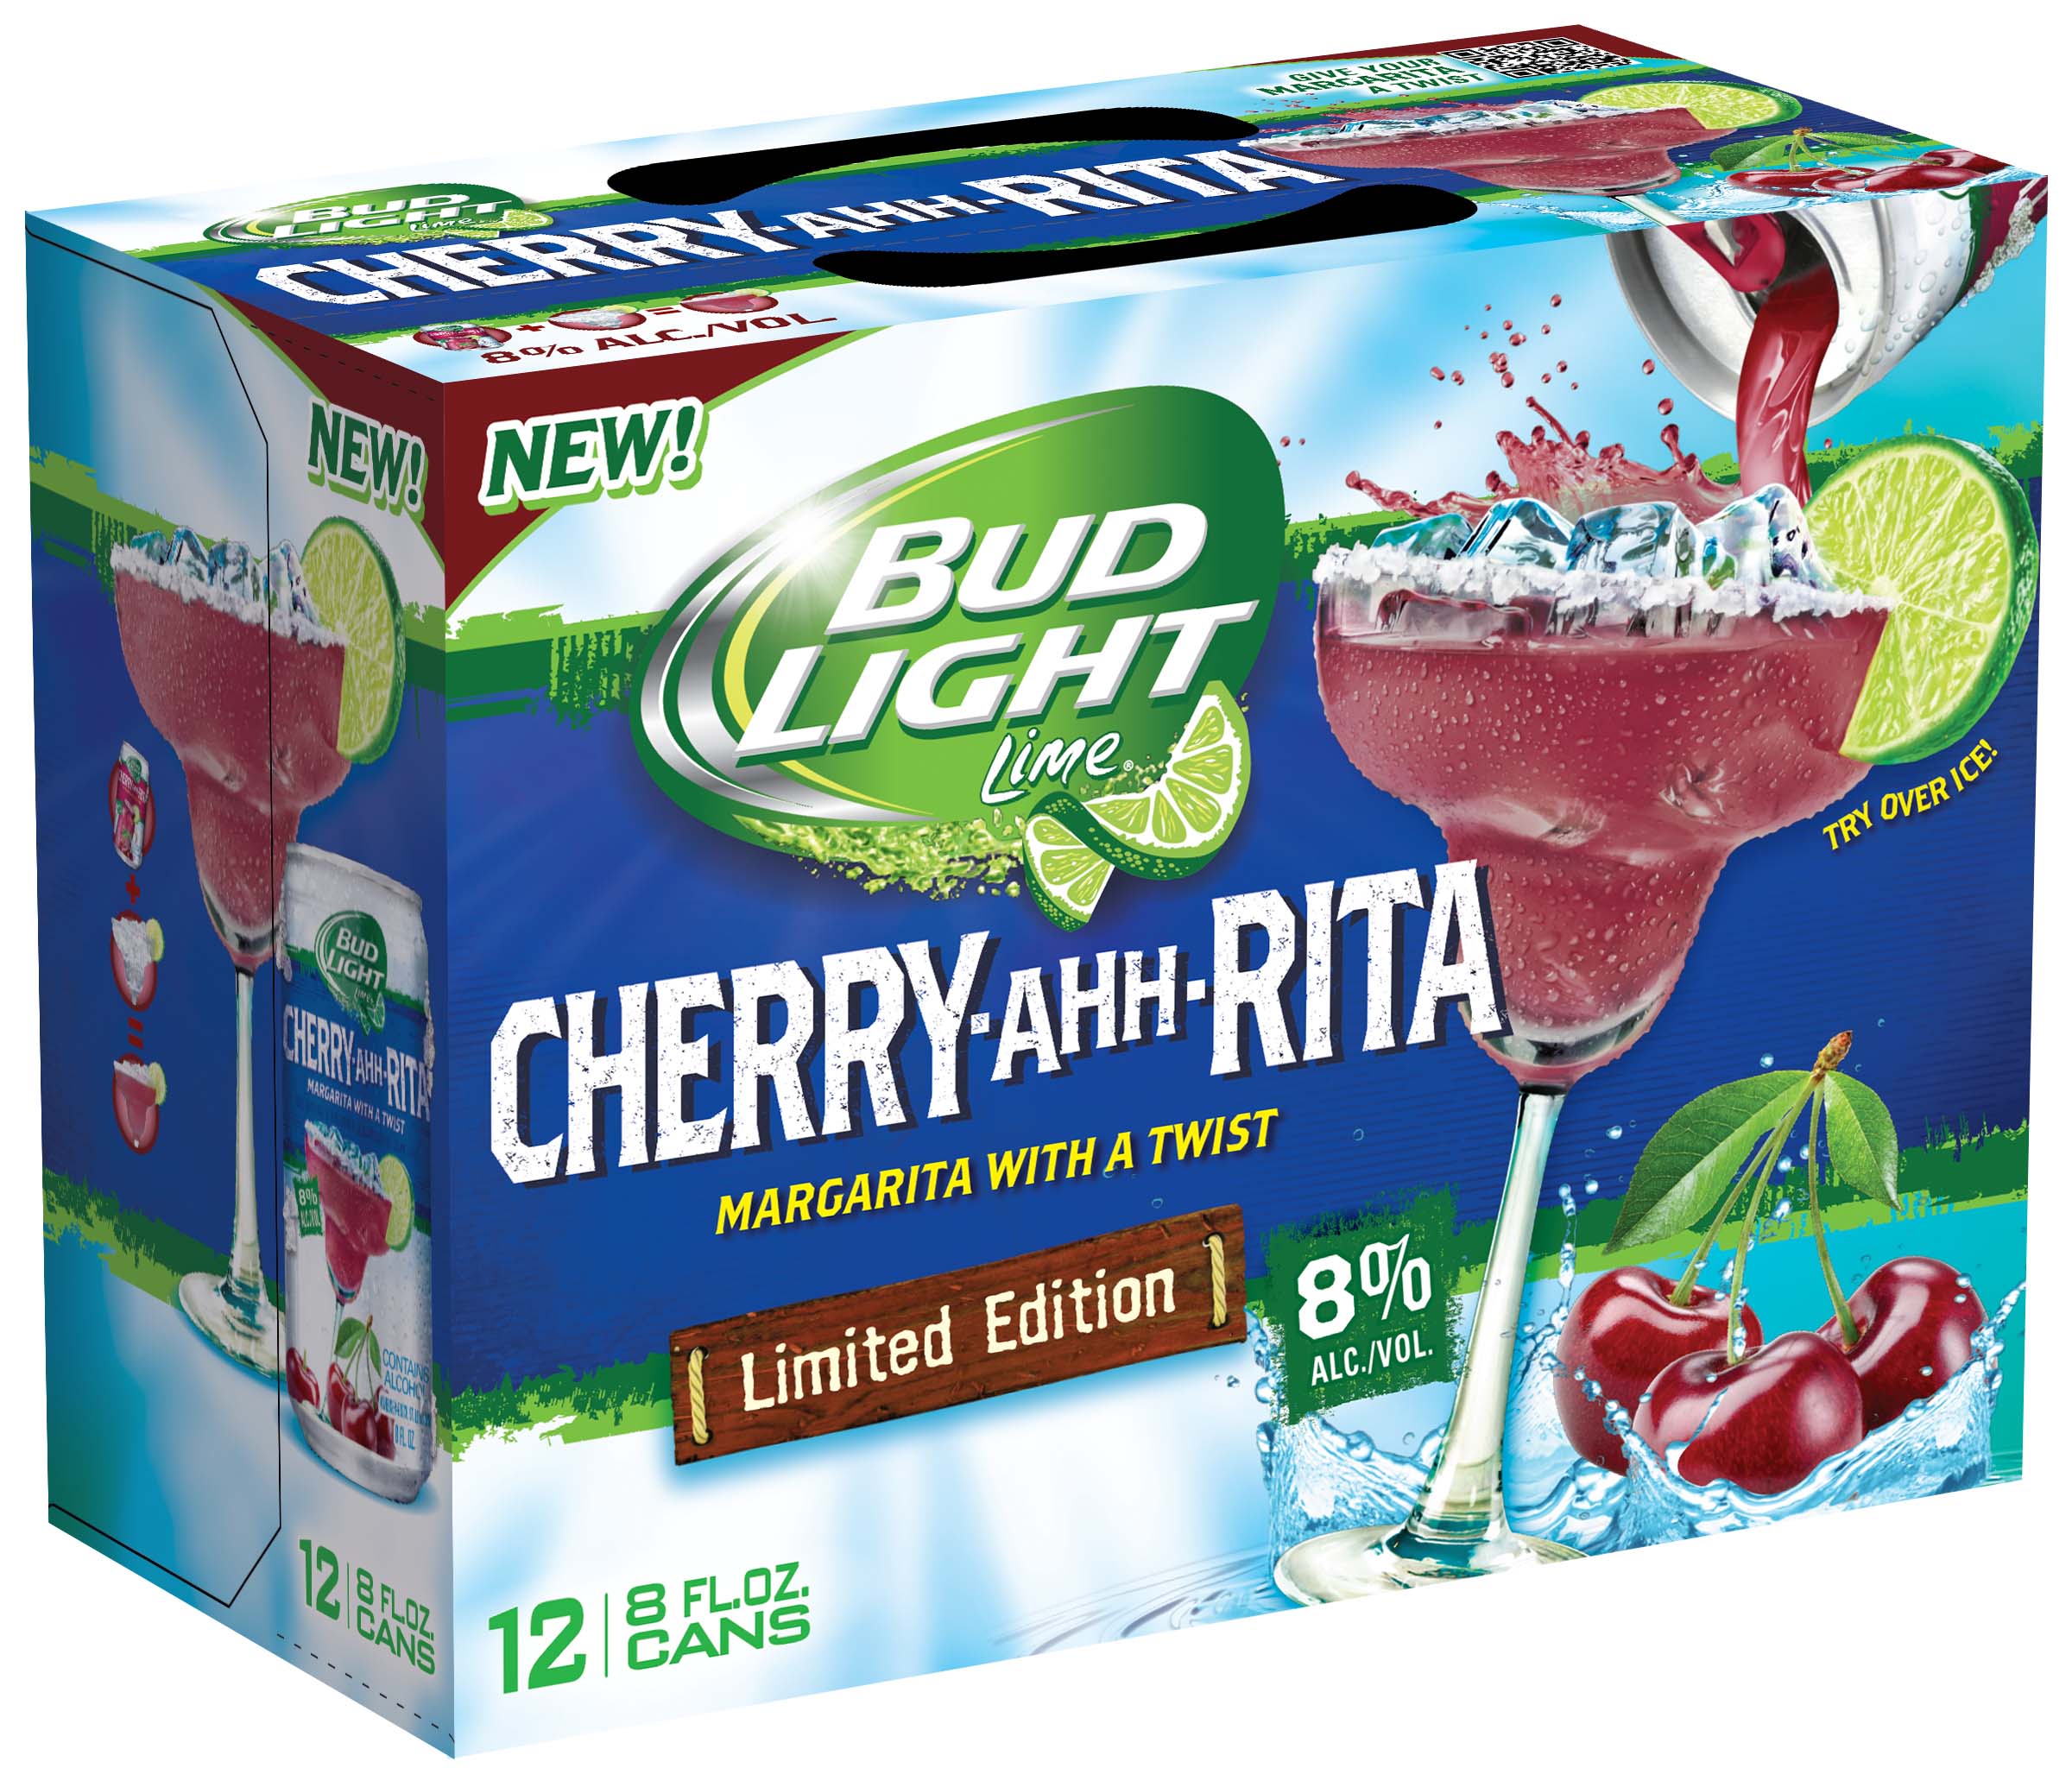 Lime A Rita Introduces Cherry Ahh